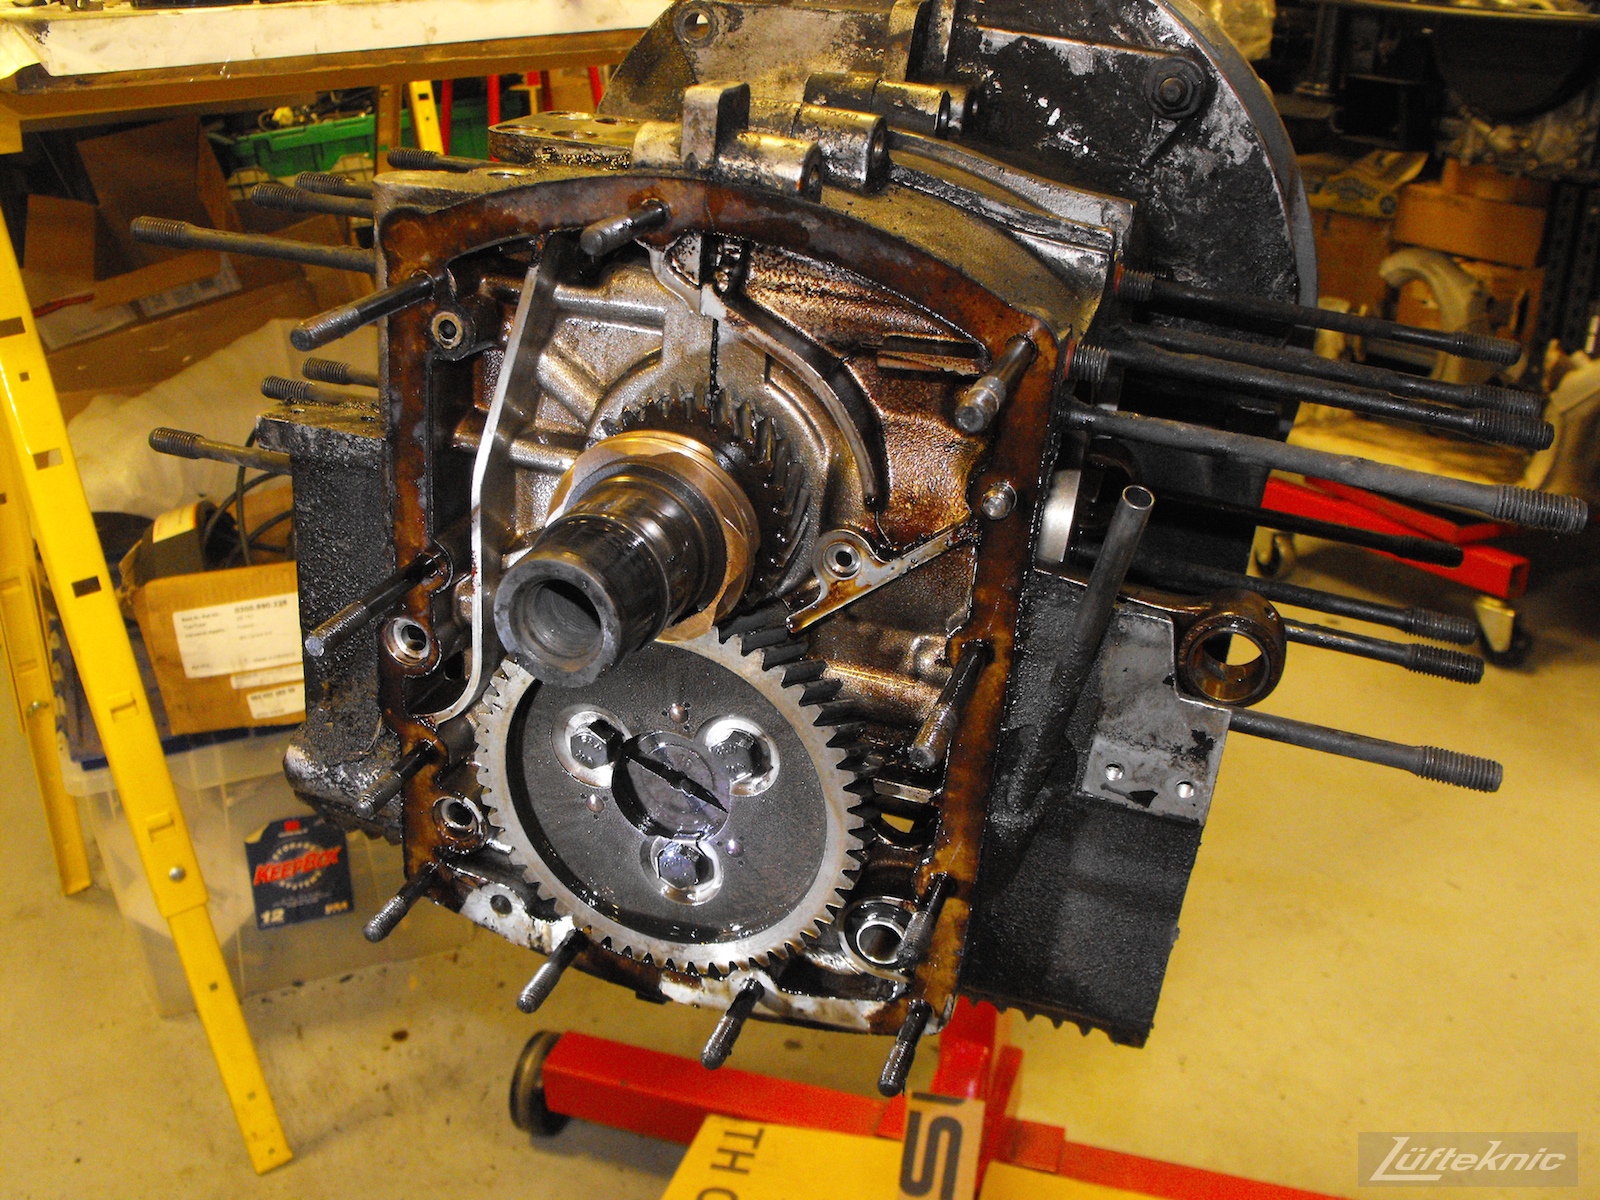 A torn down engine case from an Irish Green Porsche 912 undergoing restoration at Lufteknic.